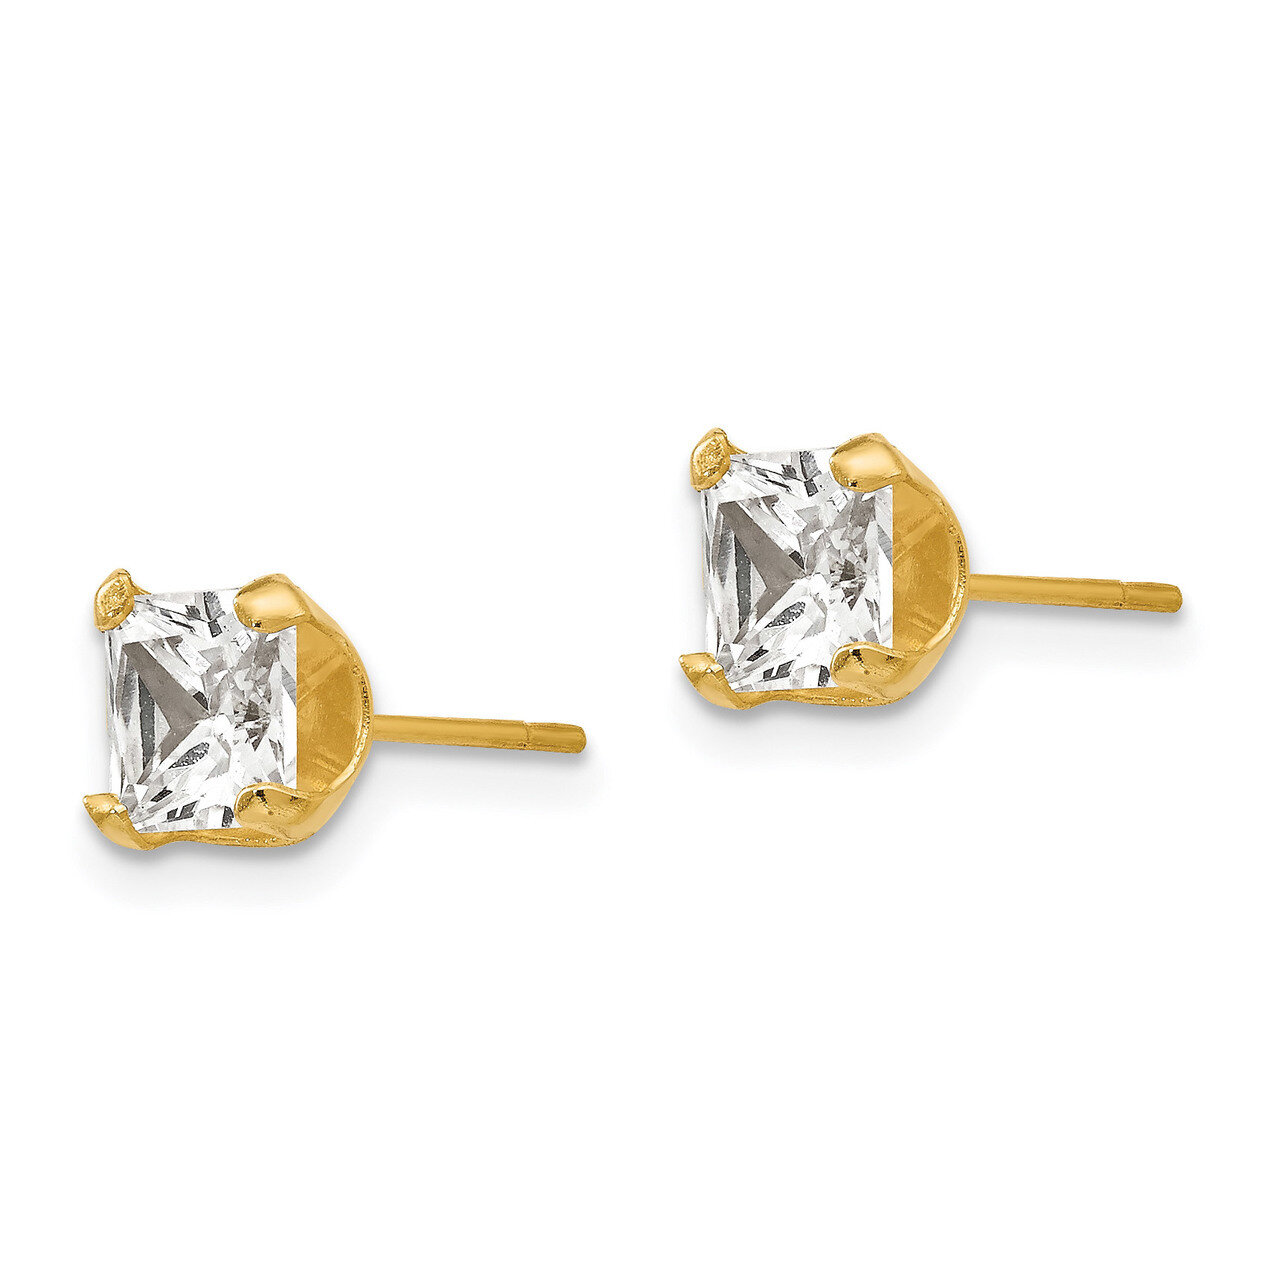 5mm Square Synthetic Diamond Post Earrings - 14k Gold SE1897